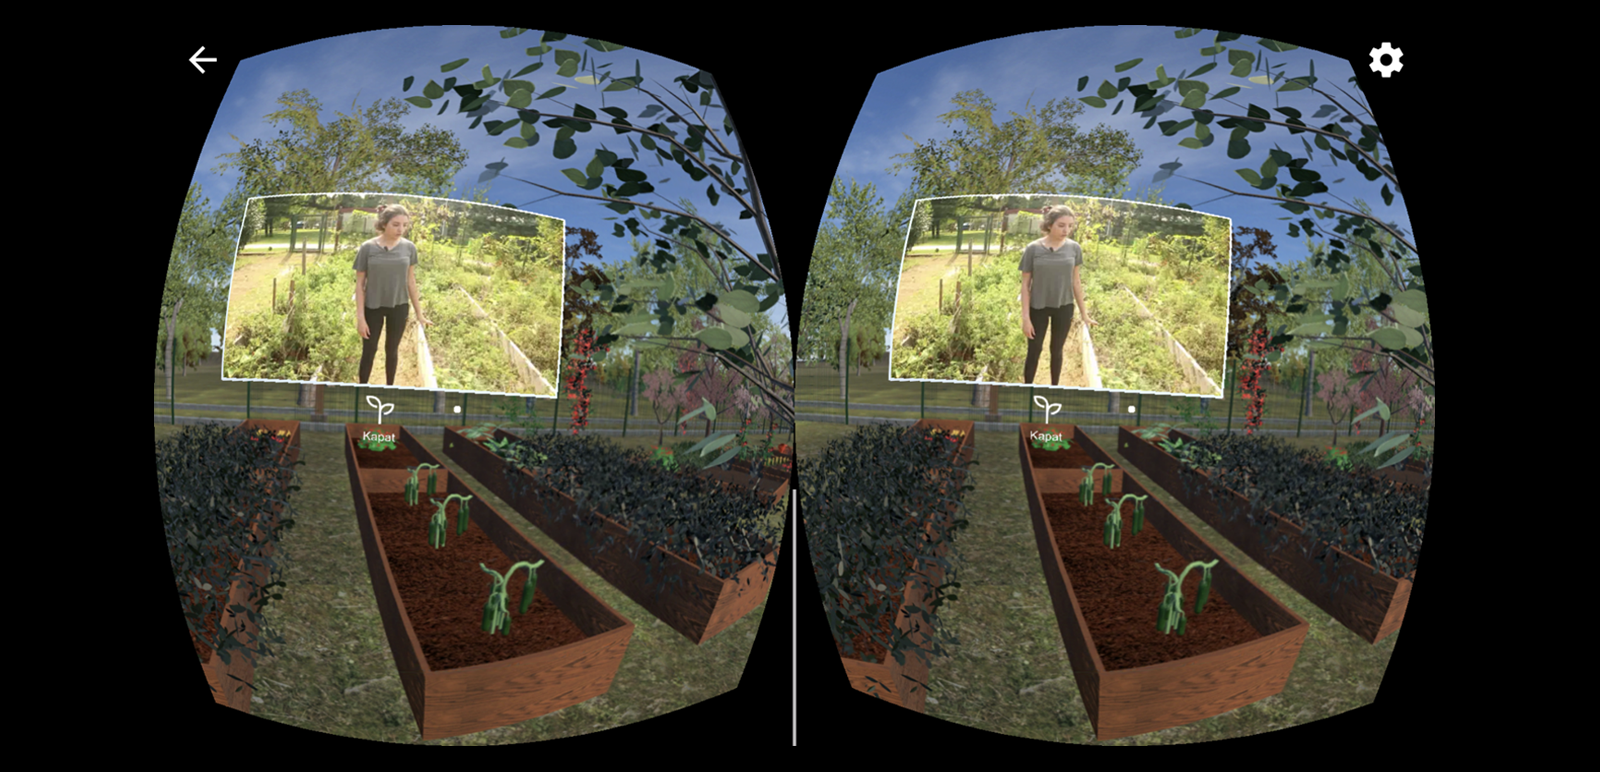 Saint Joseph Community Garden VR -Virtual Reality- Application